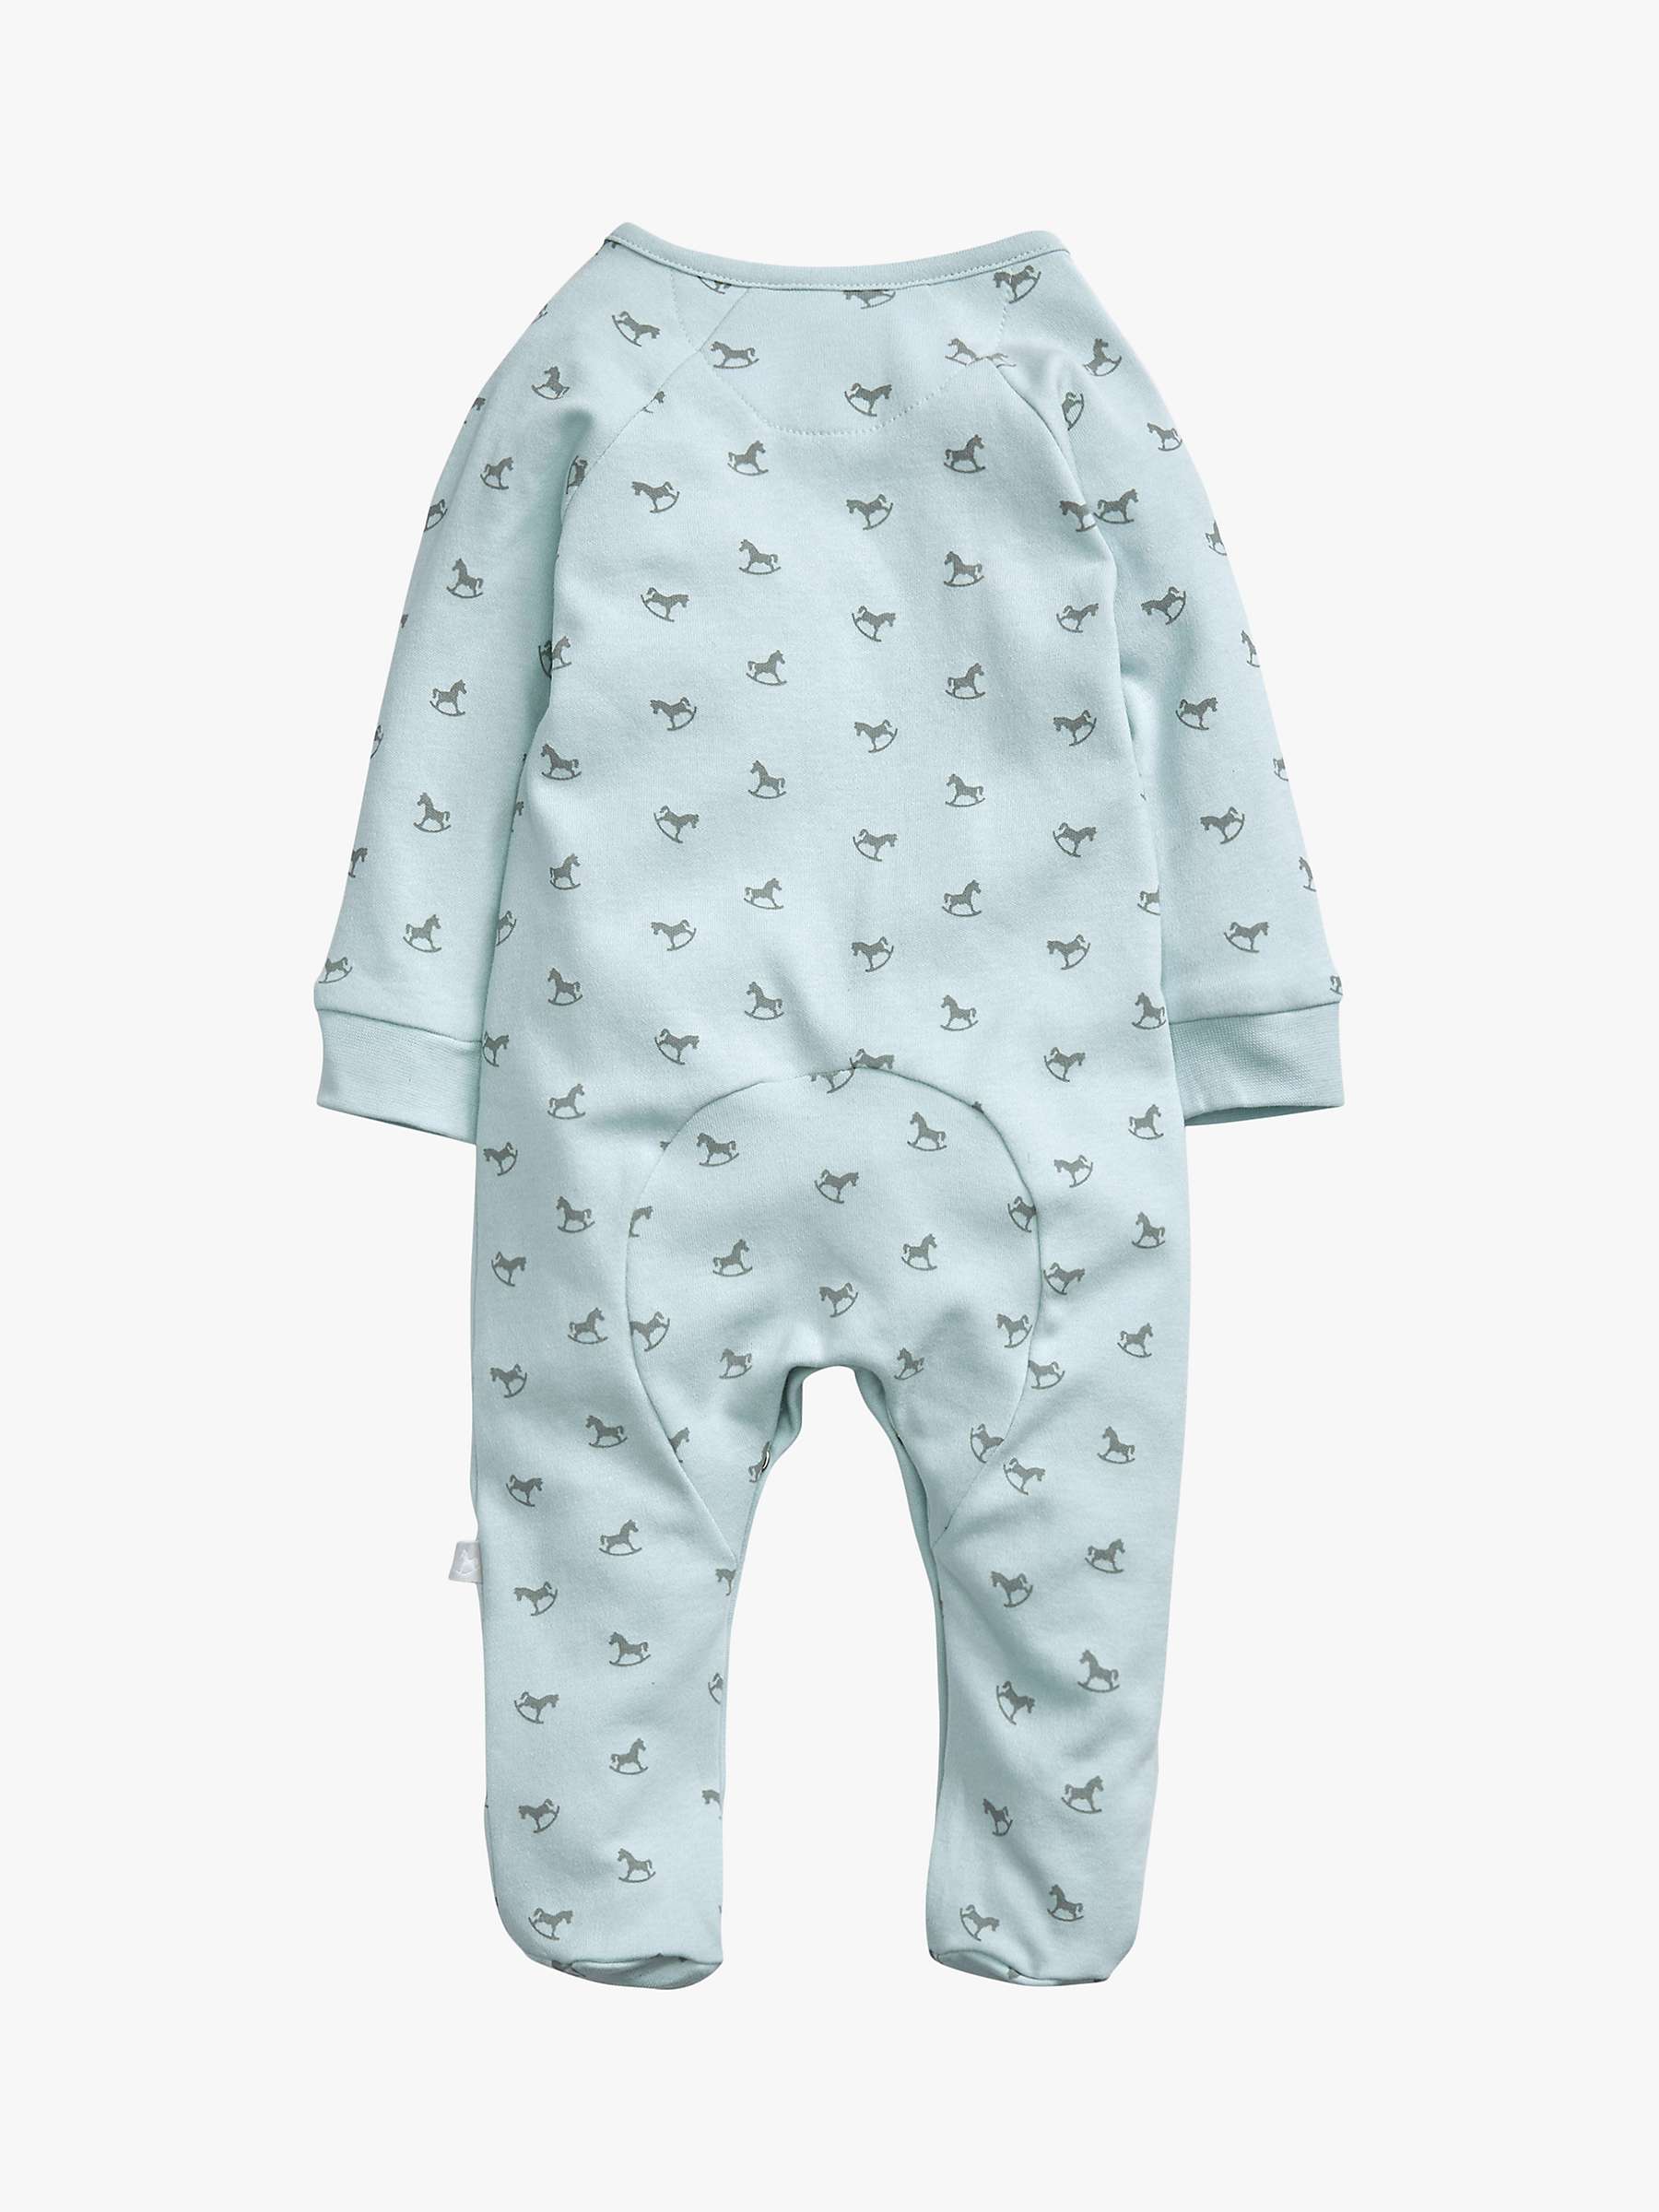 Buy The Little Tailor 7 Piece Clothing, Booties, Blanket, Bib & Comforter Baby Gift Set Online at johnlewis.com